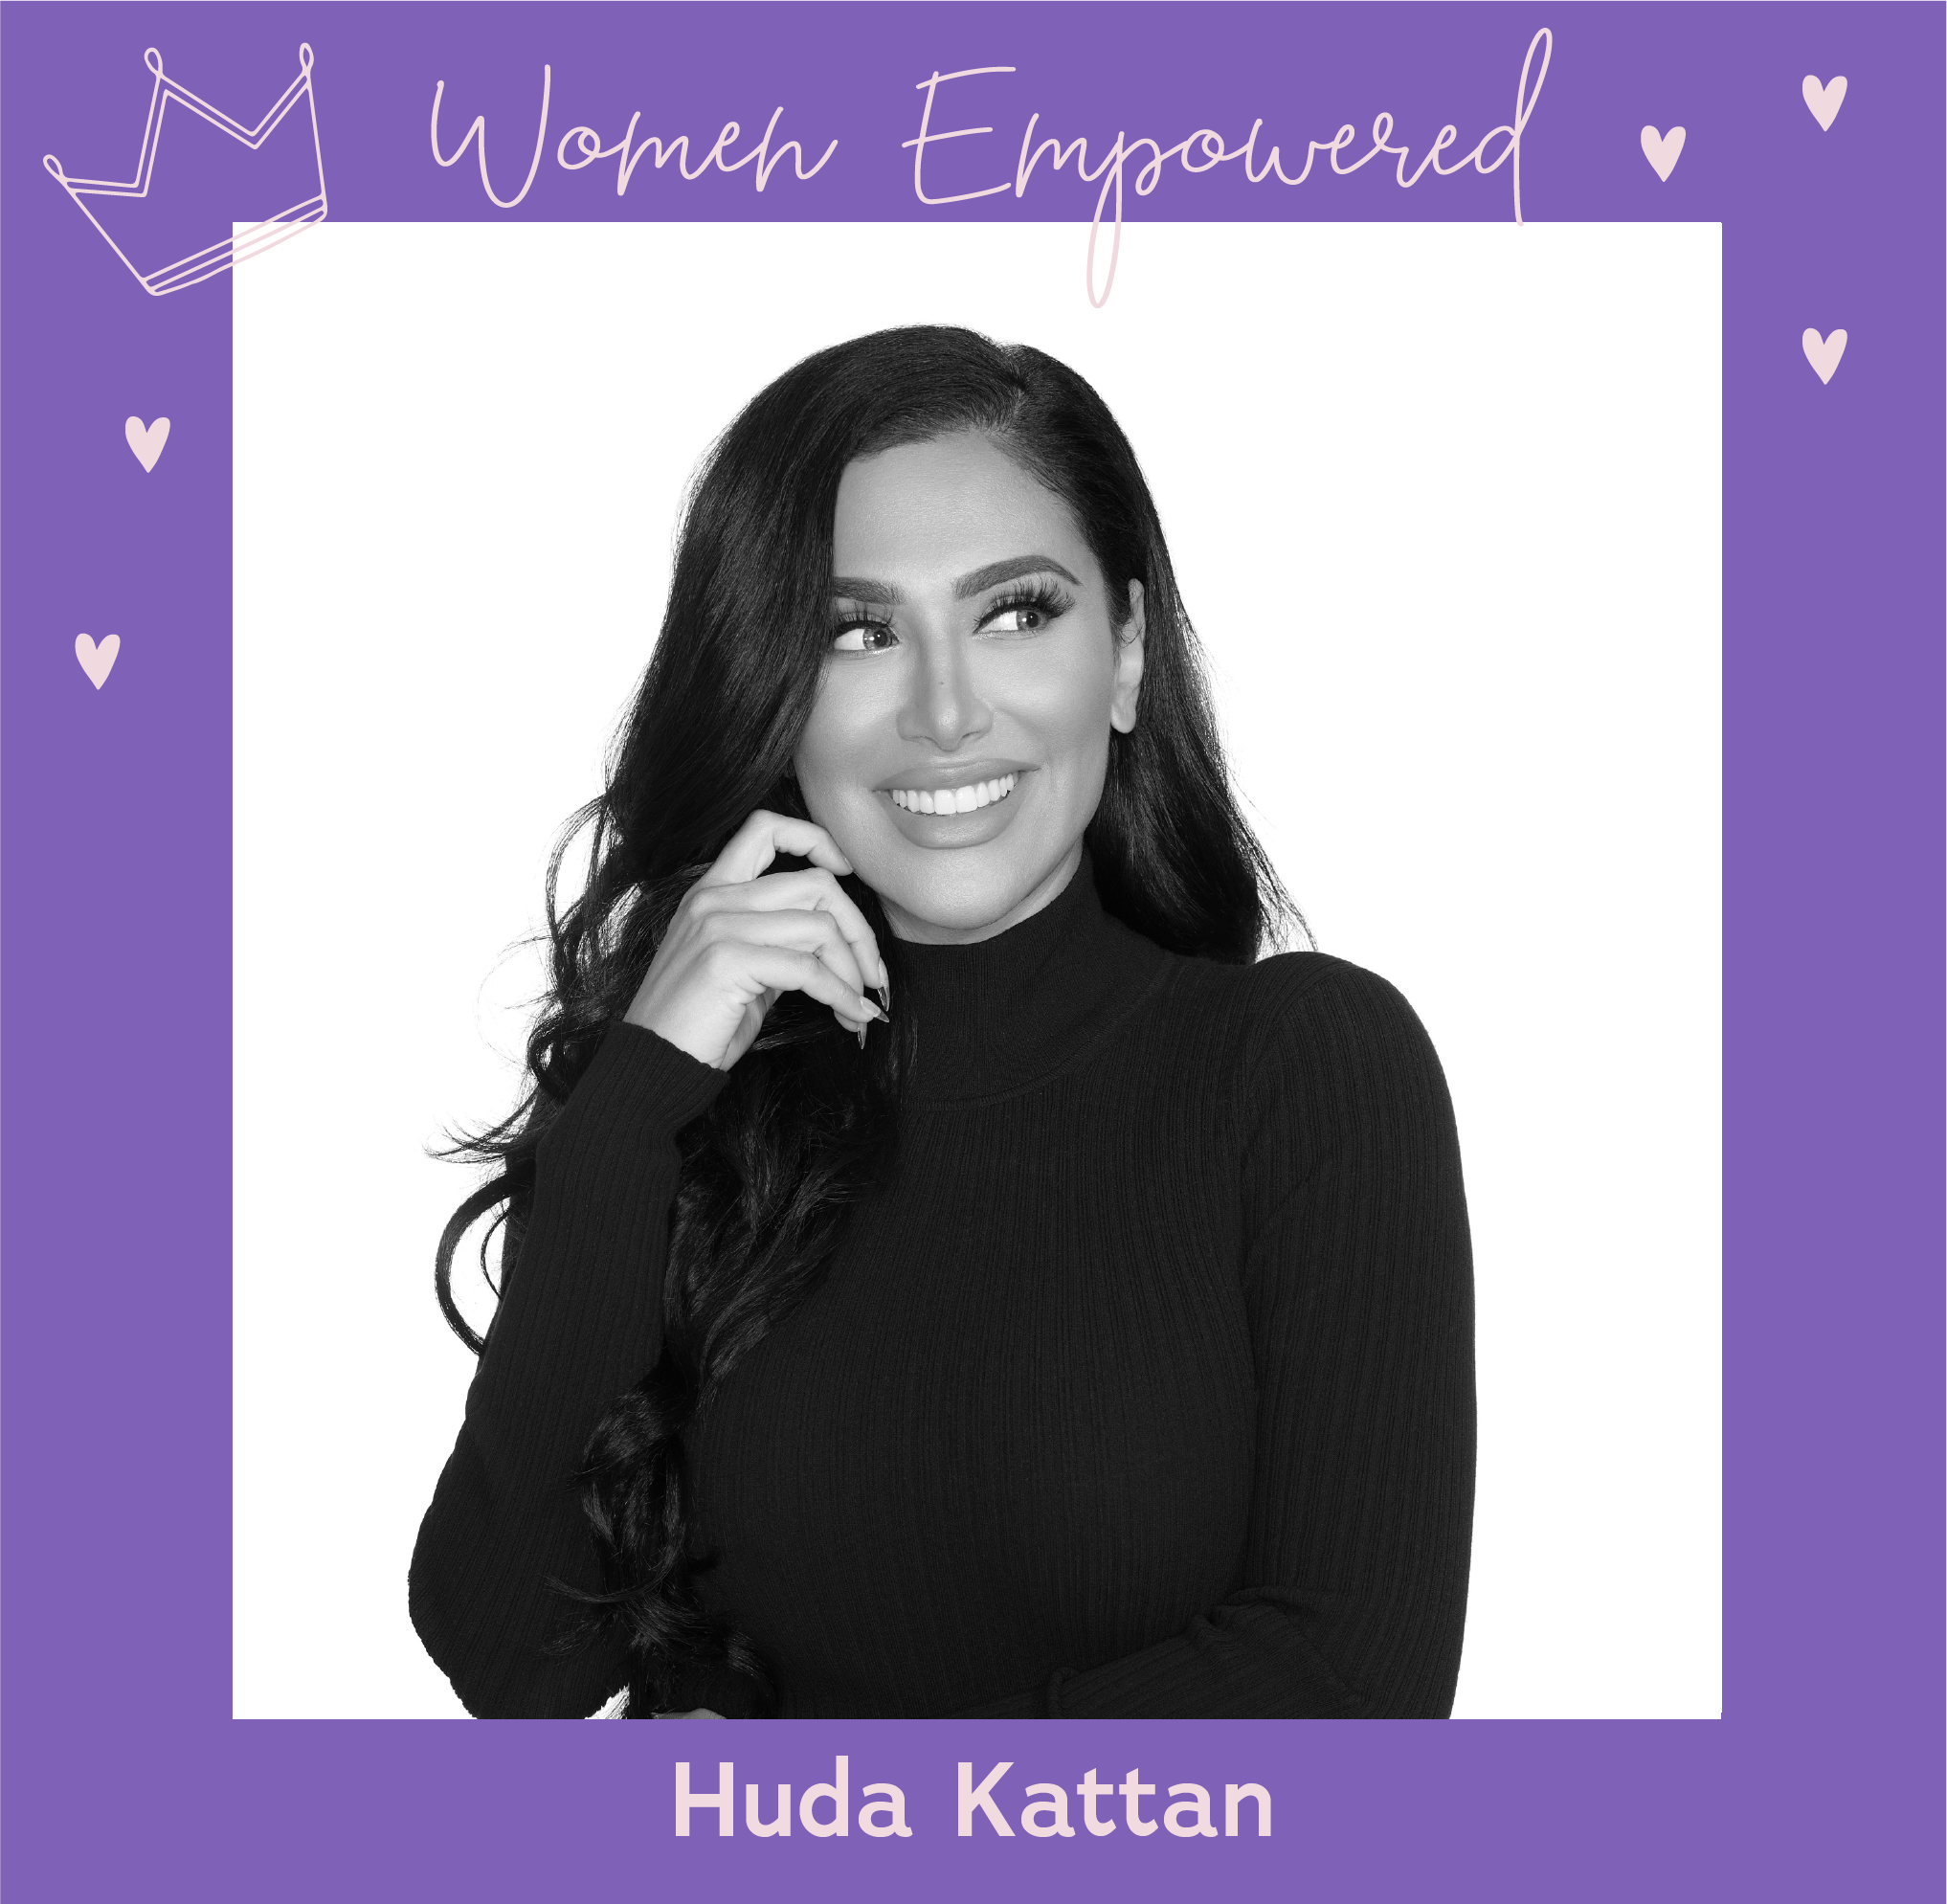 Huda Kattan's Best Beauty Tips